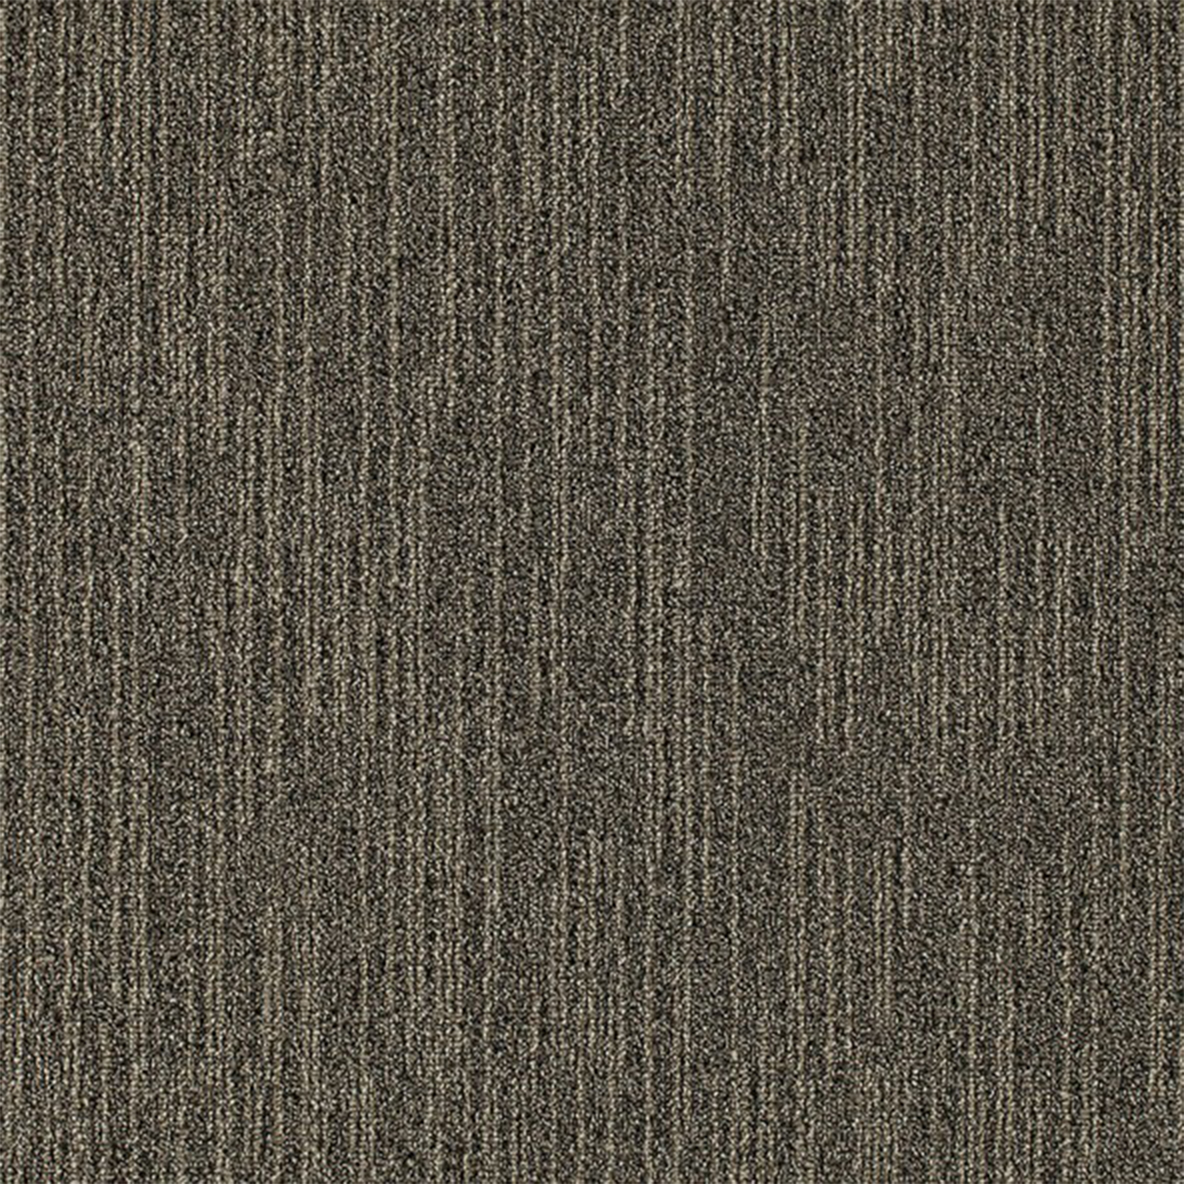 Overdirve Commercial Carpet Tile .30 Inch x 50x50 cm per Tile Umber color close up